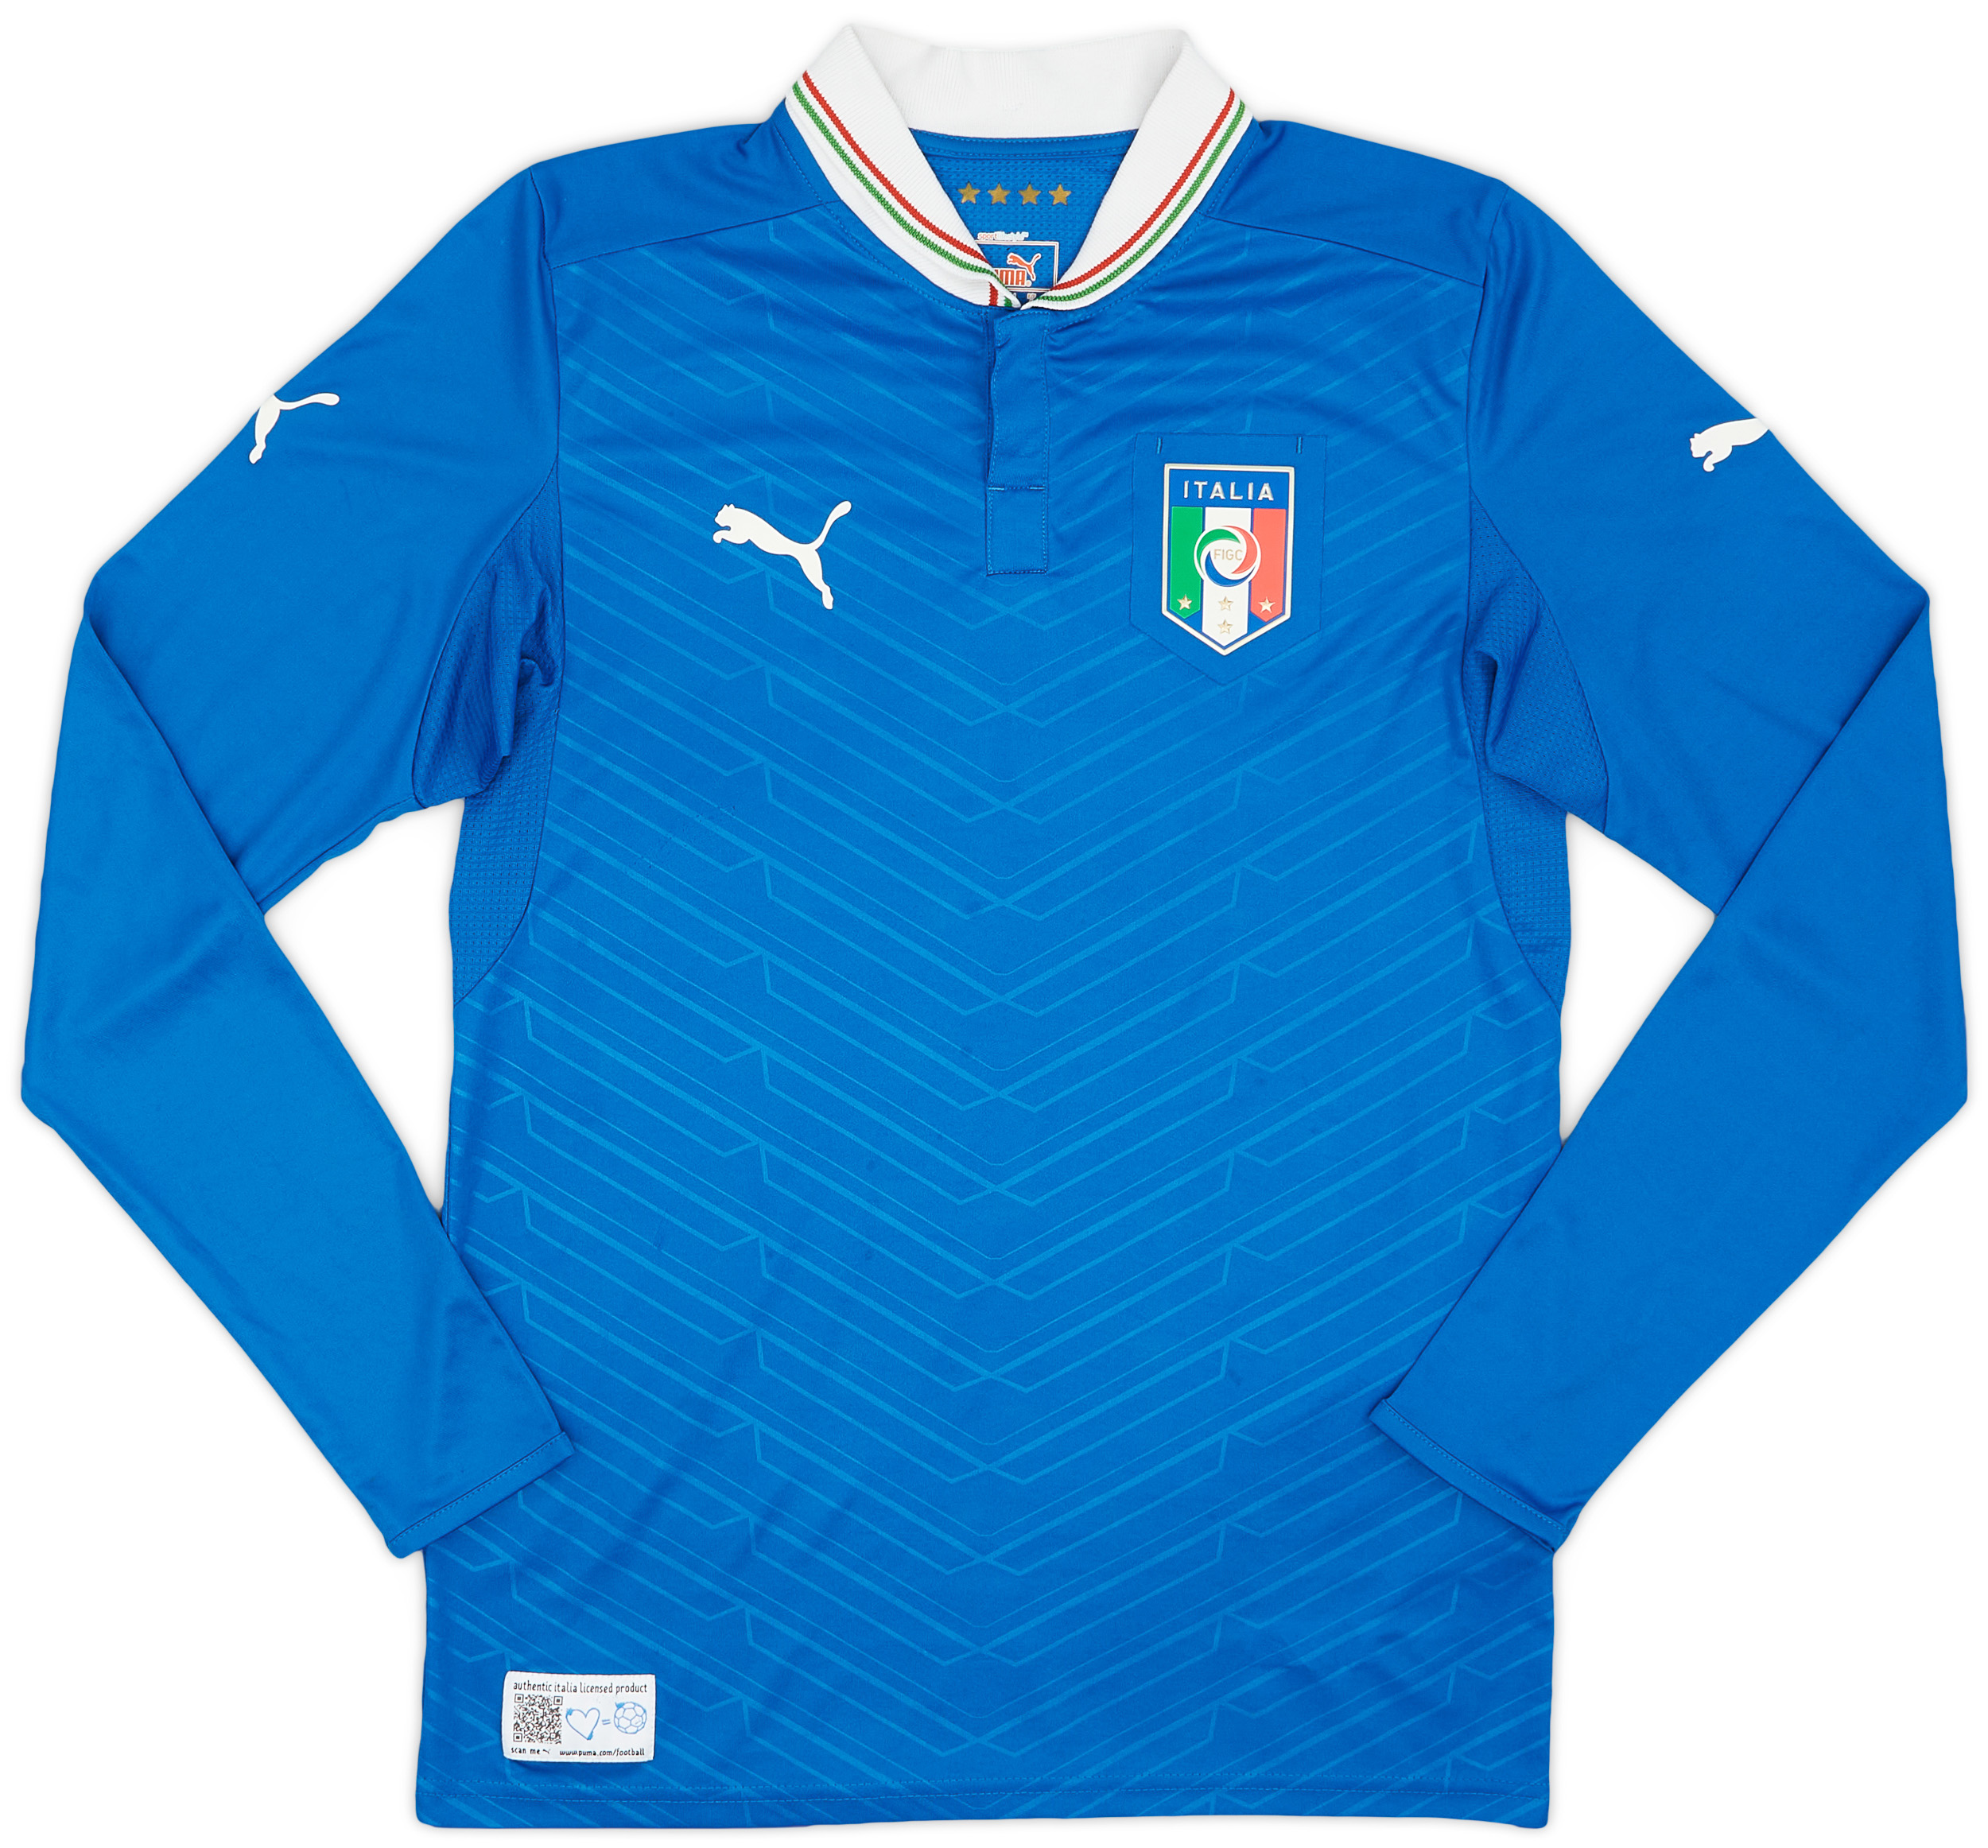 2012-13 Italy Home Shirt - 10/10 - ()